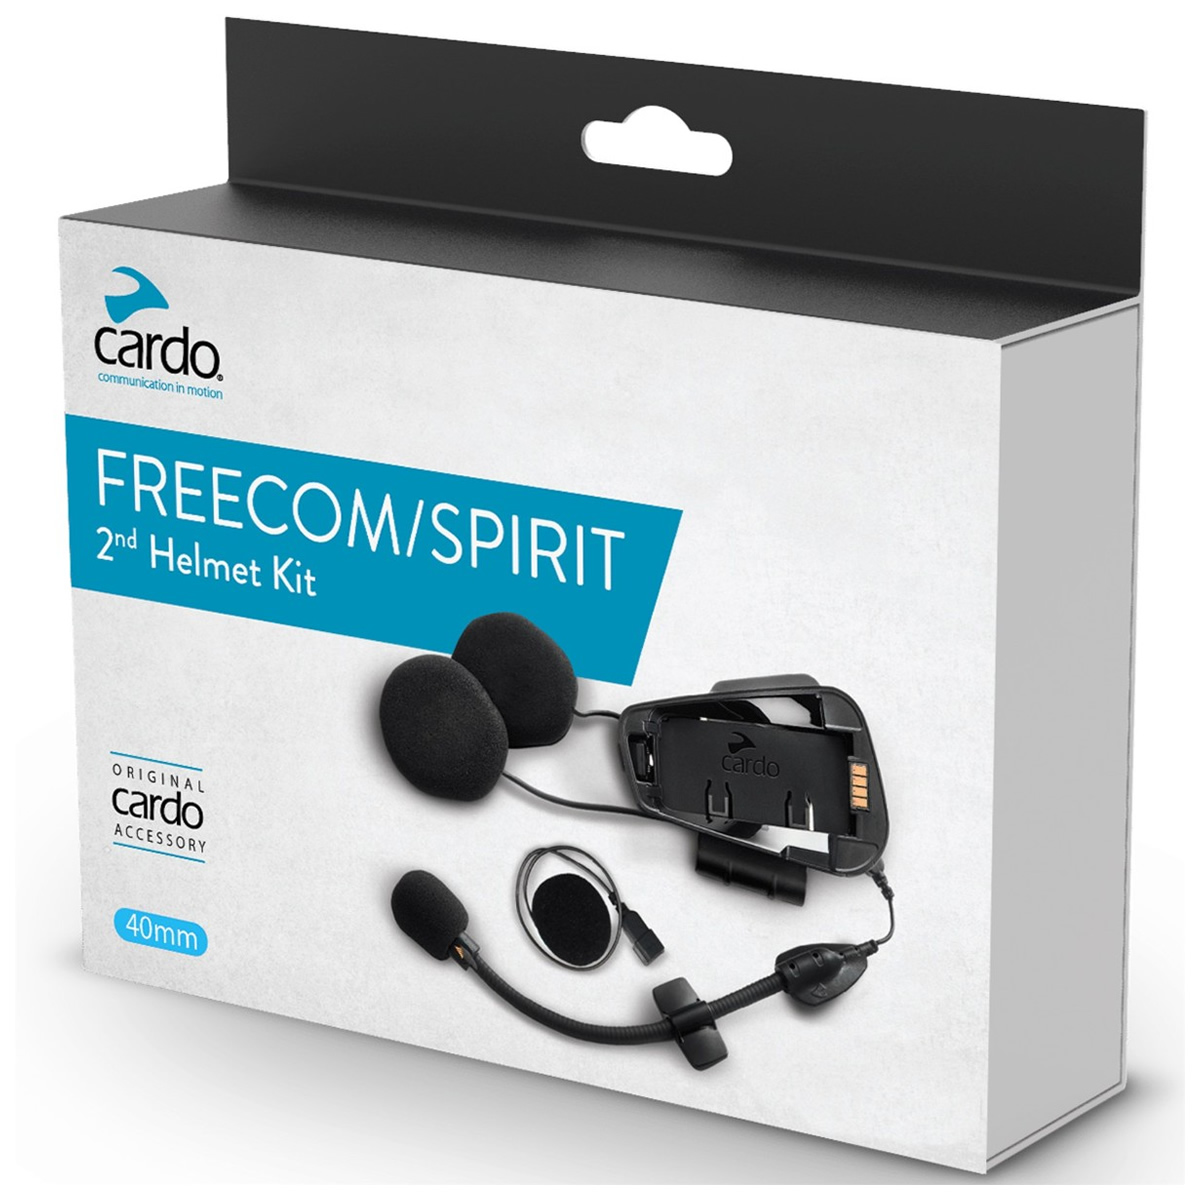 Cardo Freecom/Spirit 2nd Helmet-Kit